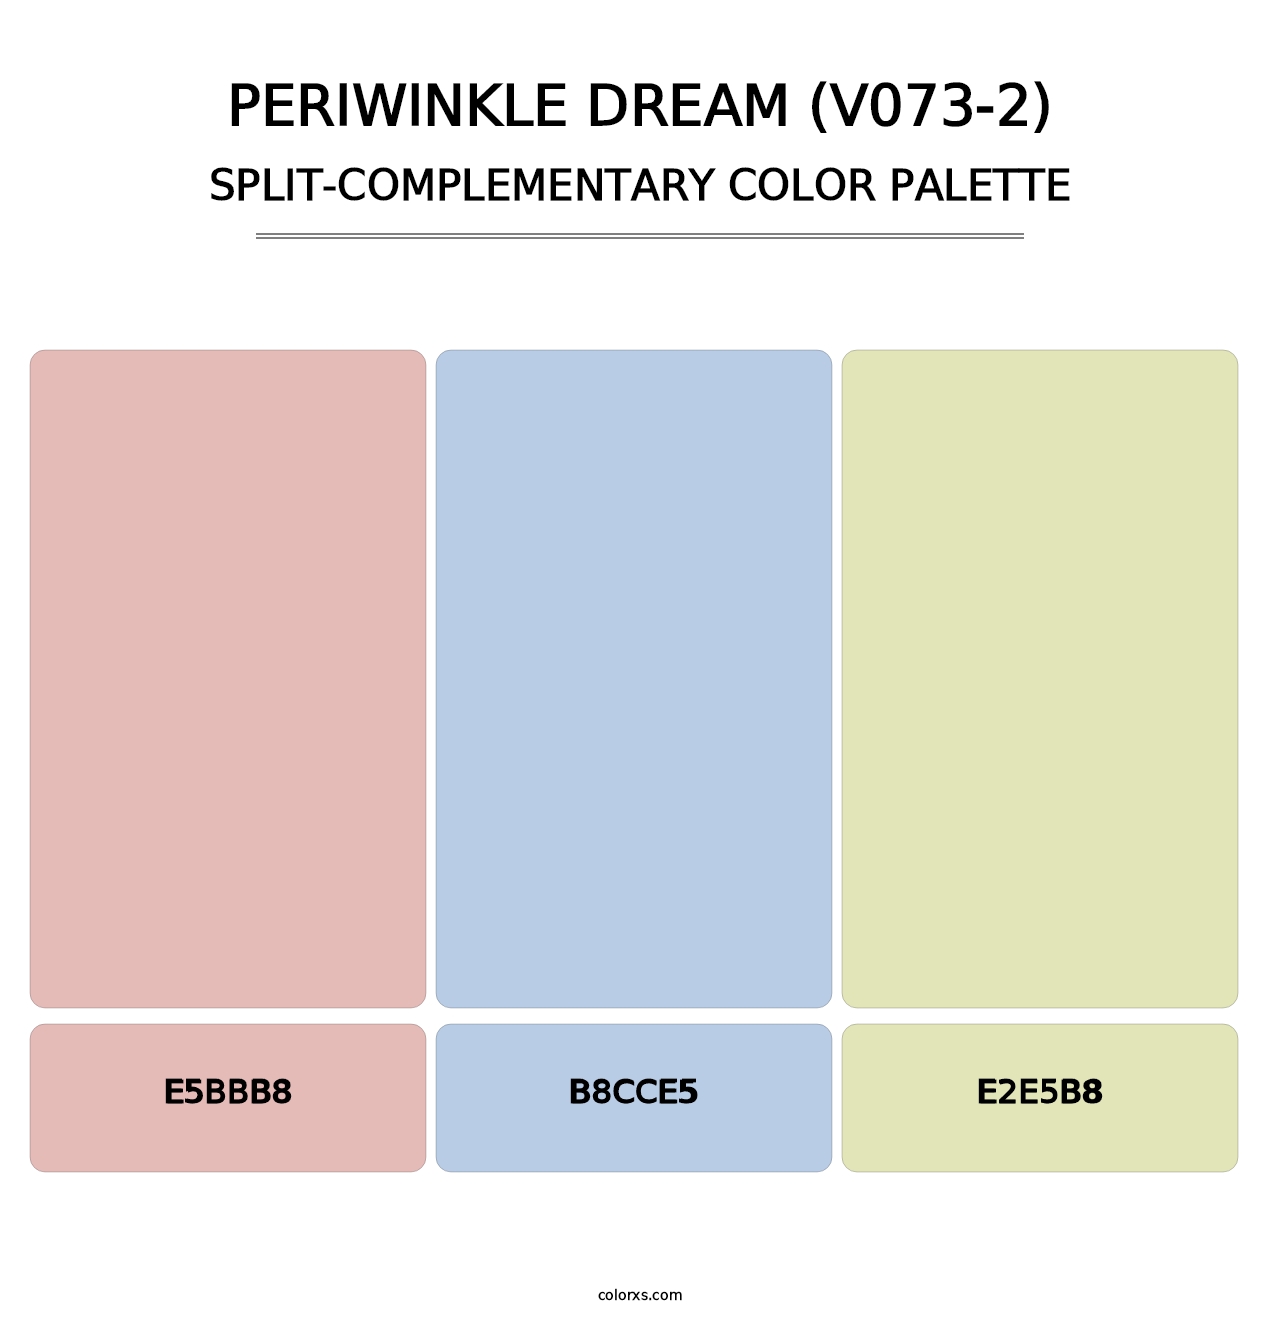 Periwinkle Dream (V073-2) - Split-Complementary Color Palette